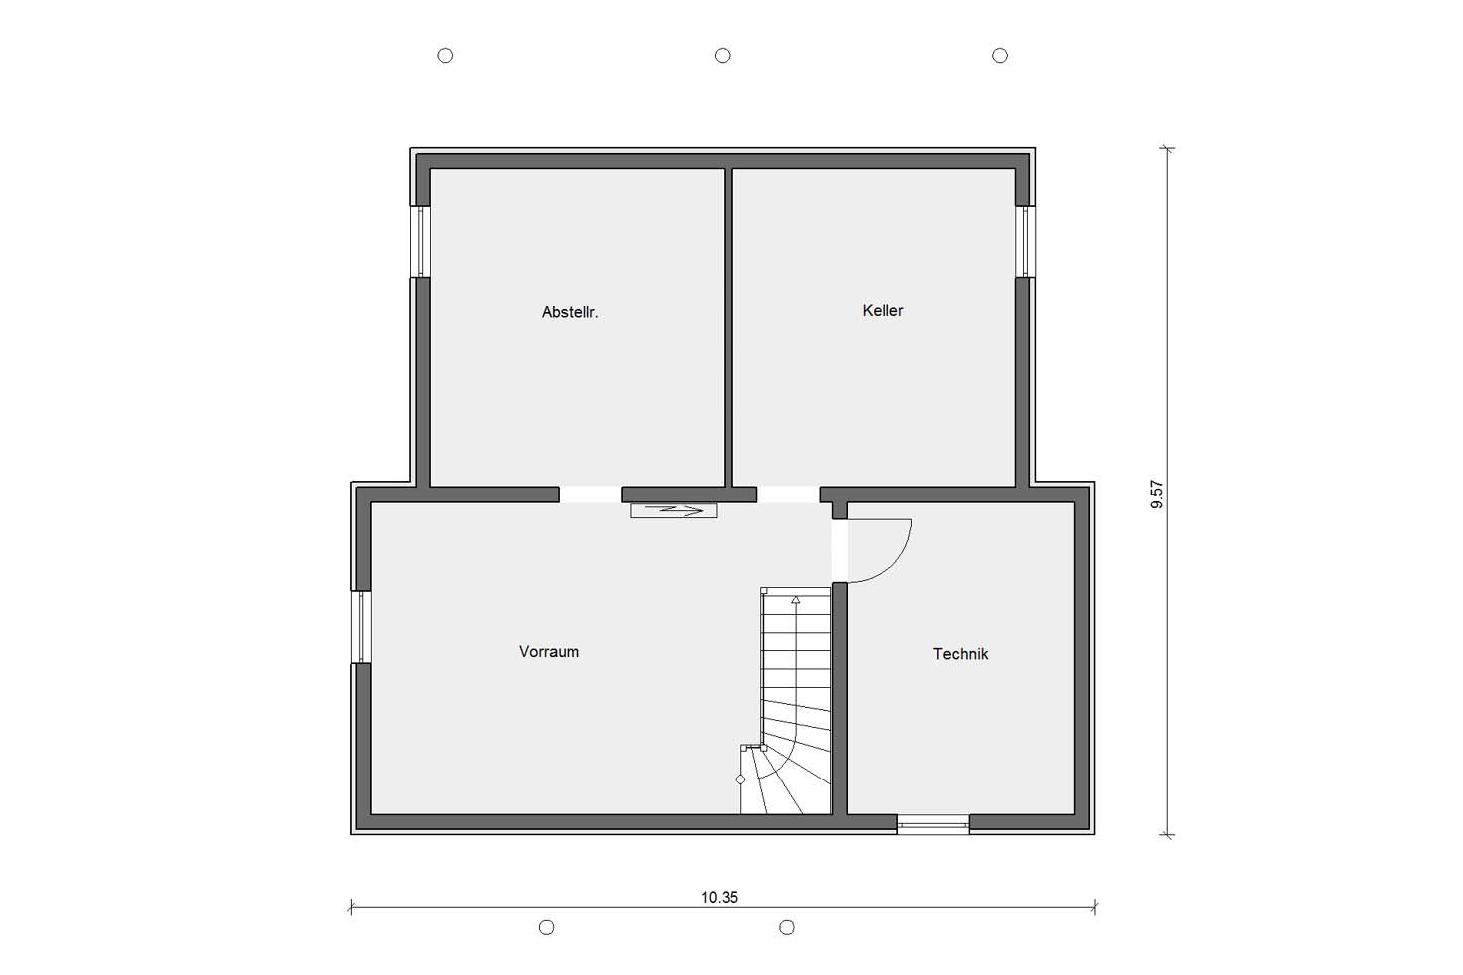 Pianta seminterrato E 15-146.1 casa prefabbricata moderna